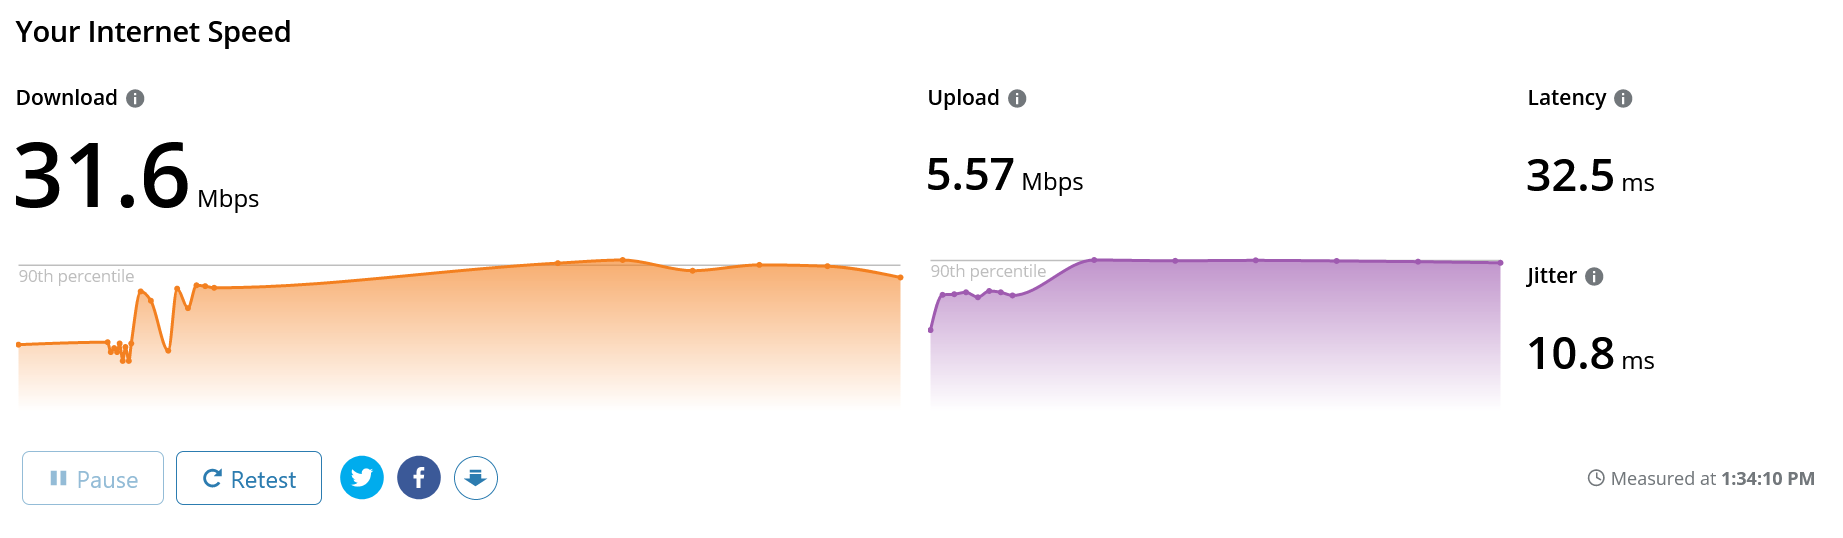 Screenshot_2021-02-04 Internet Speed Test - Measure Latency Jitter Cloudflare.png